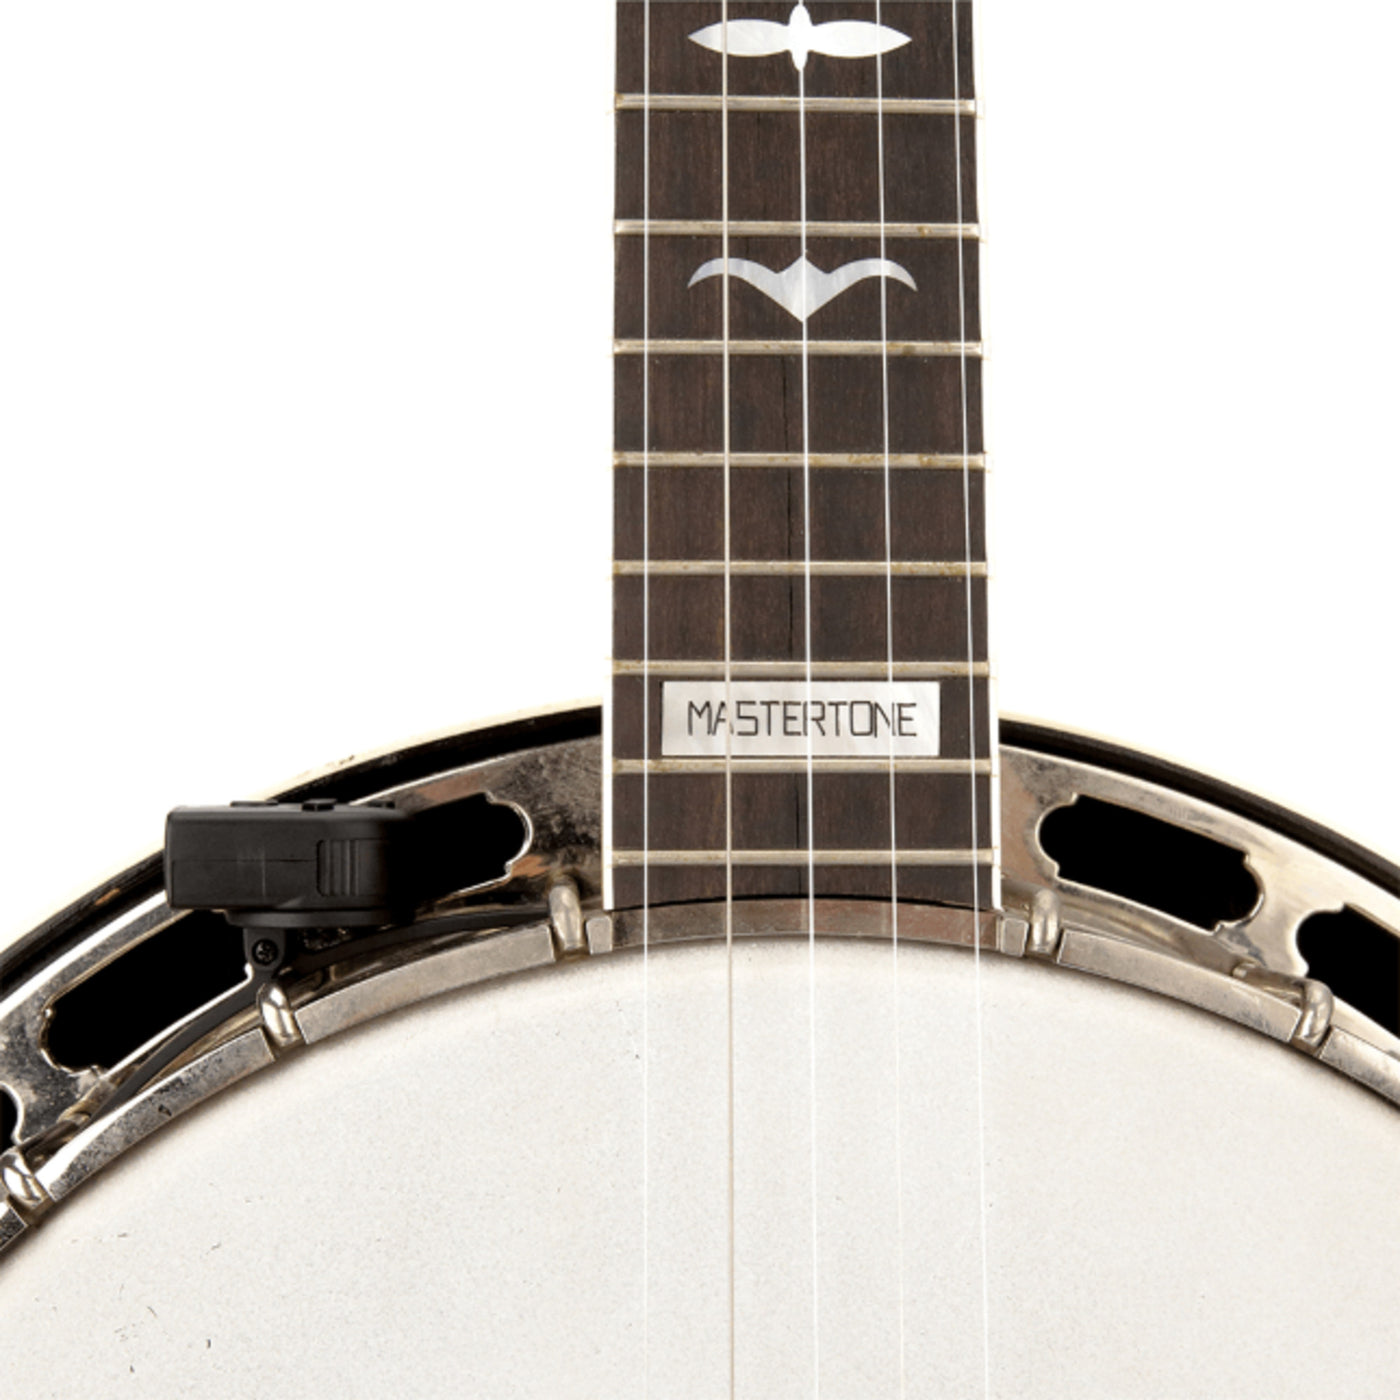 D'Addario Micro Banjo Tuner (PW-CT-16)